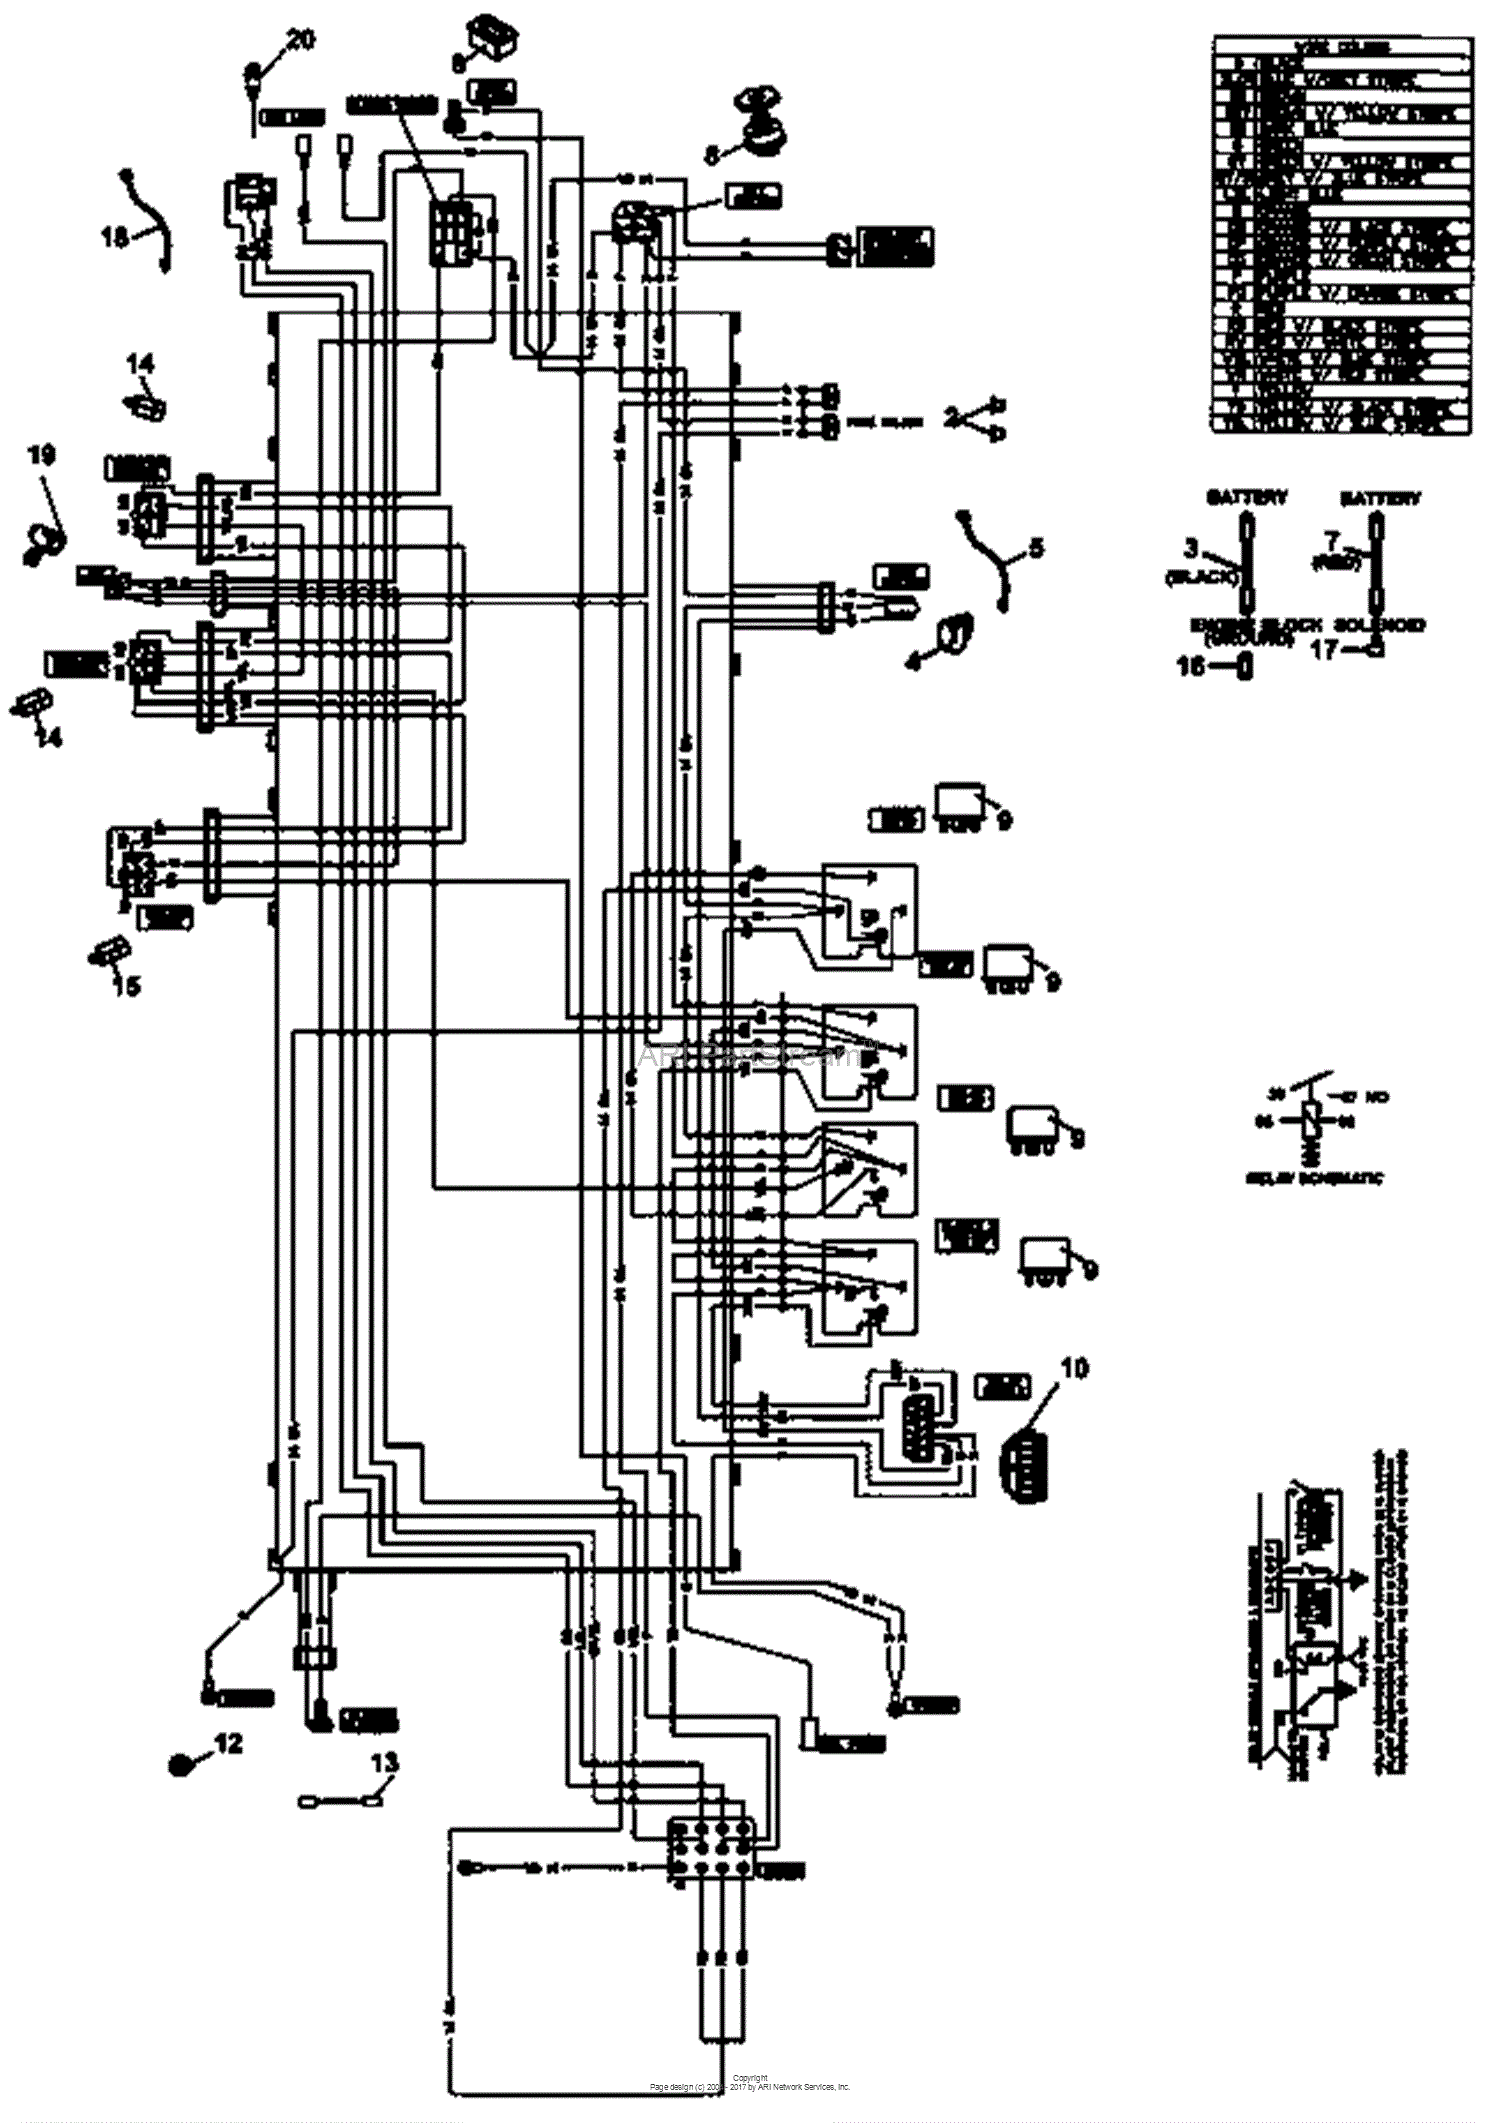 17 Hp Kohler Engine Wiring Diagram from az417944.vo.msecnd.net